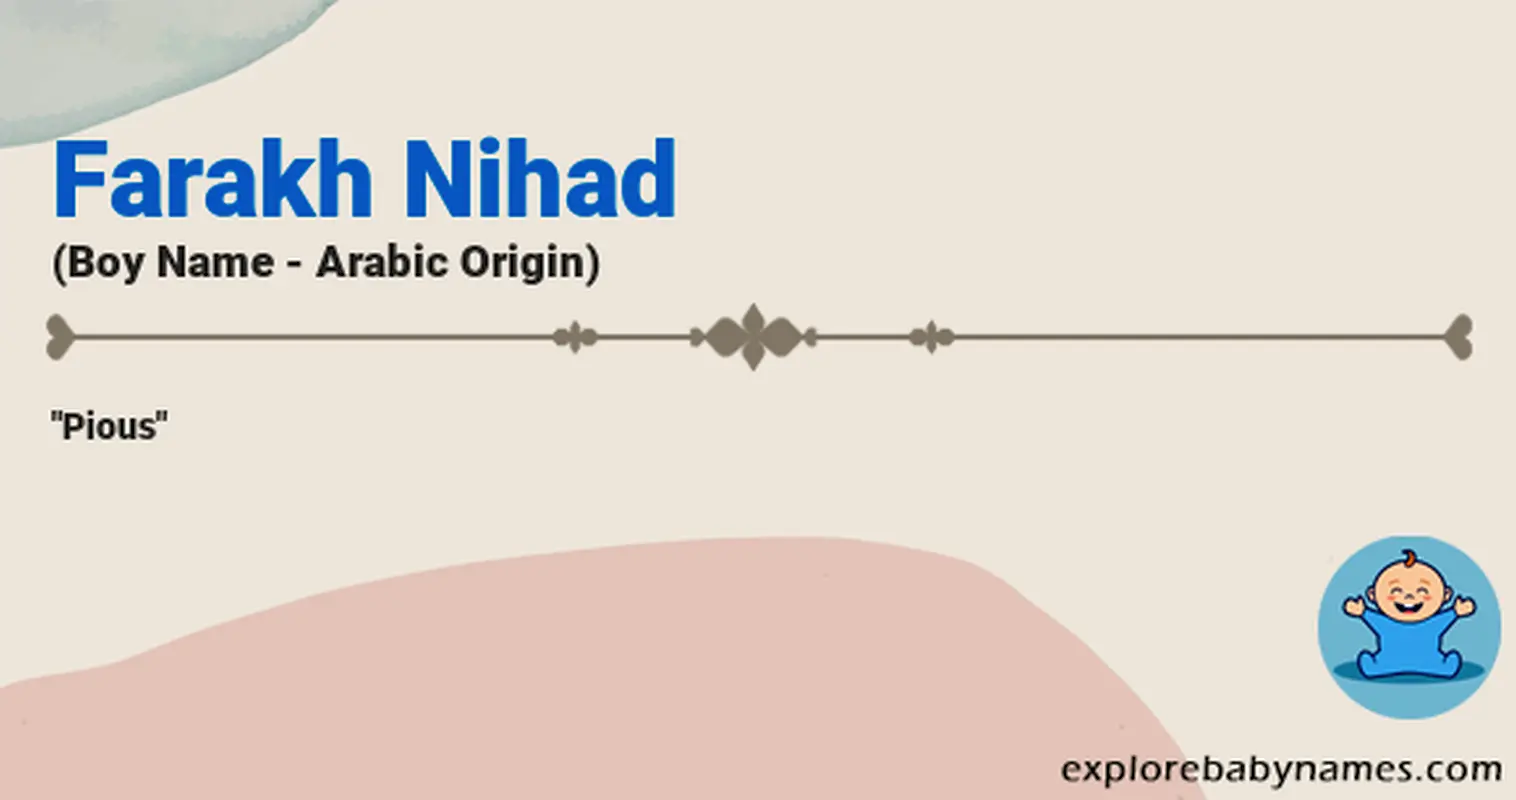 Meaning of Farakh Nihad